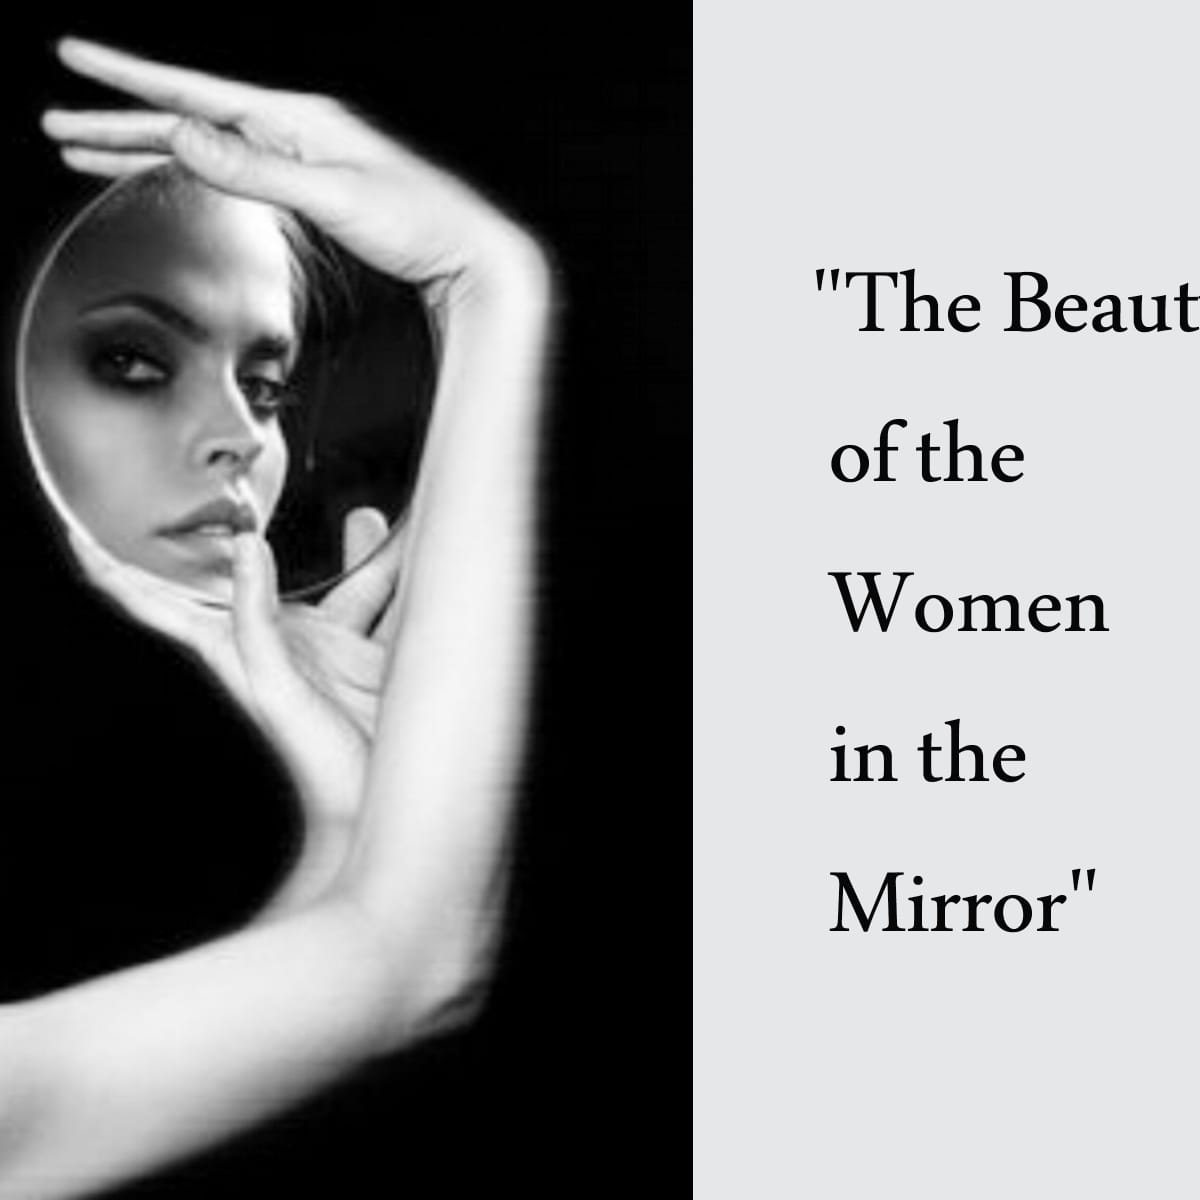 black woman looking in the mirror